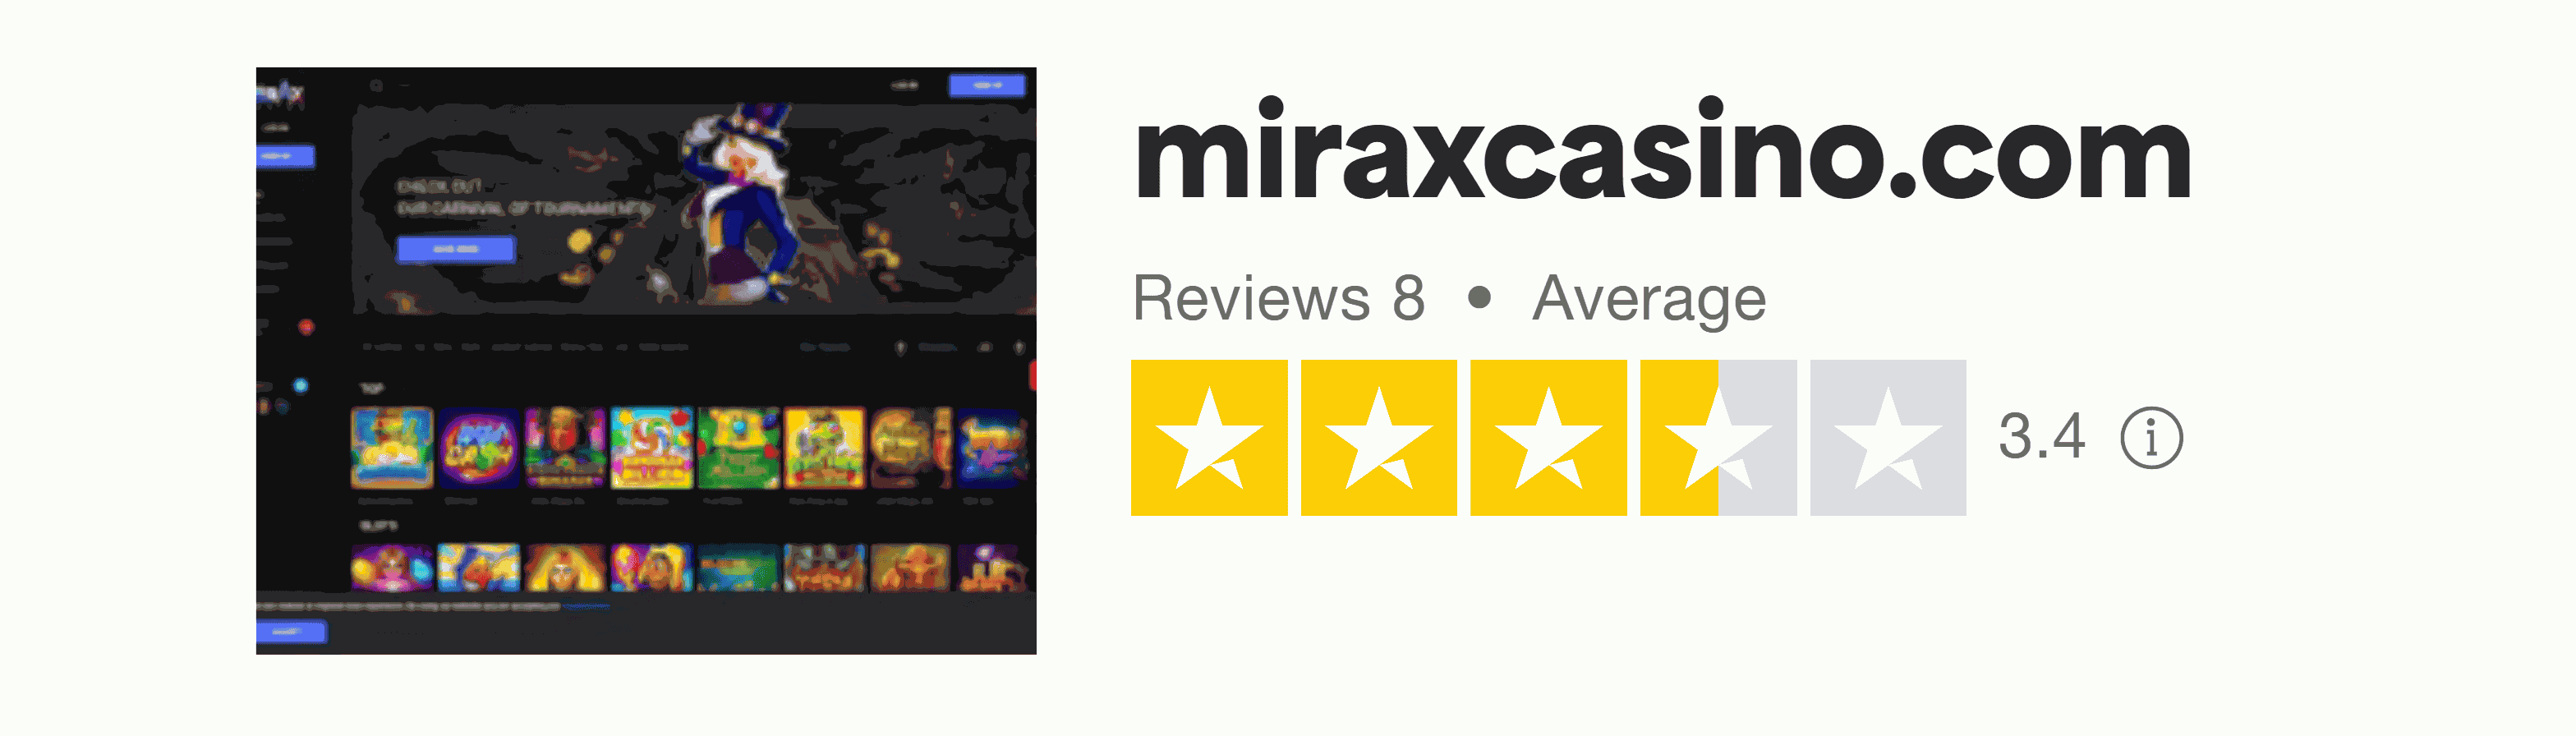 Trustpilot rating screenshot for the Mirax